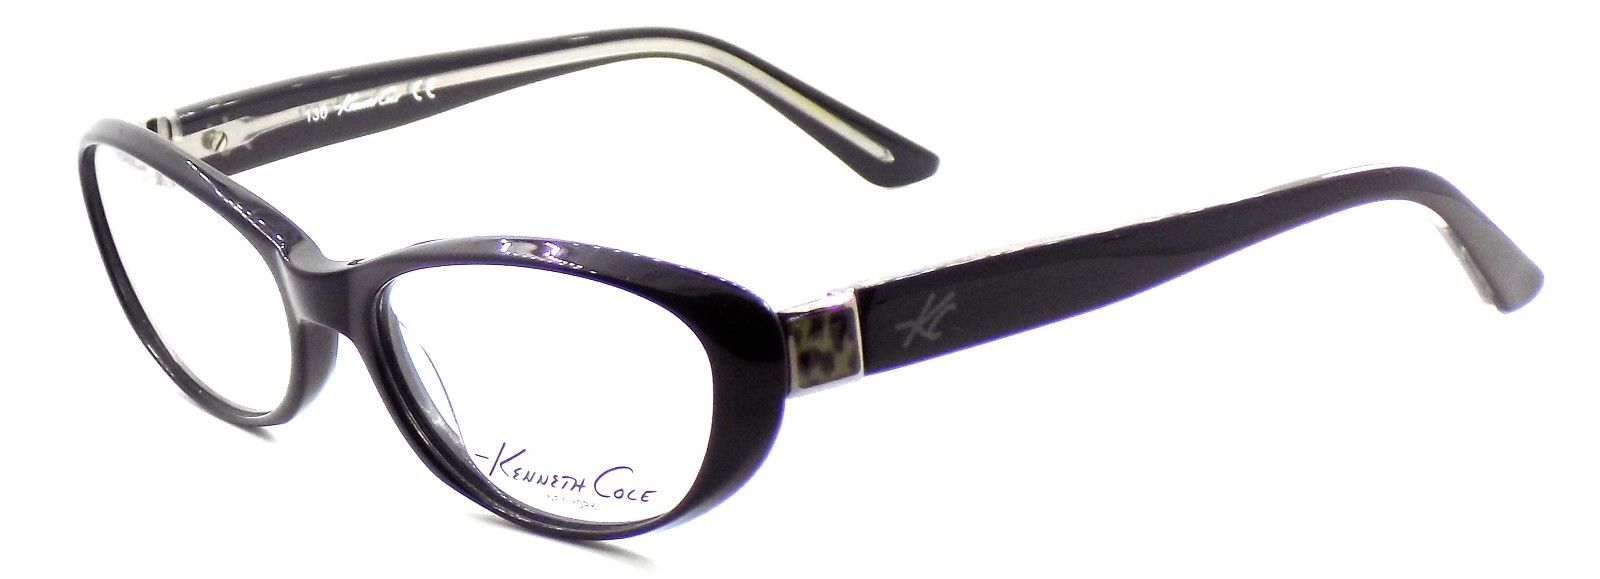 1-Kenneth Cole NY KC189 001 Women's Eyeglasses Frames 51-15-130 Shiny Black + CASE-726773217024-IKSpecs